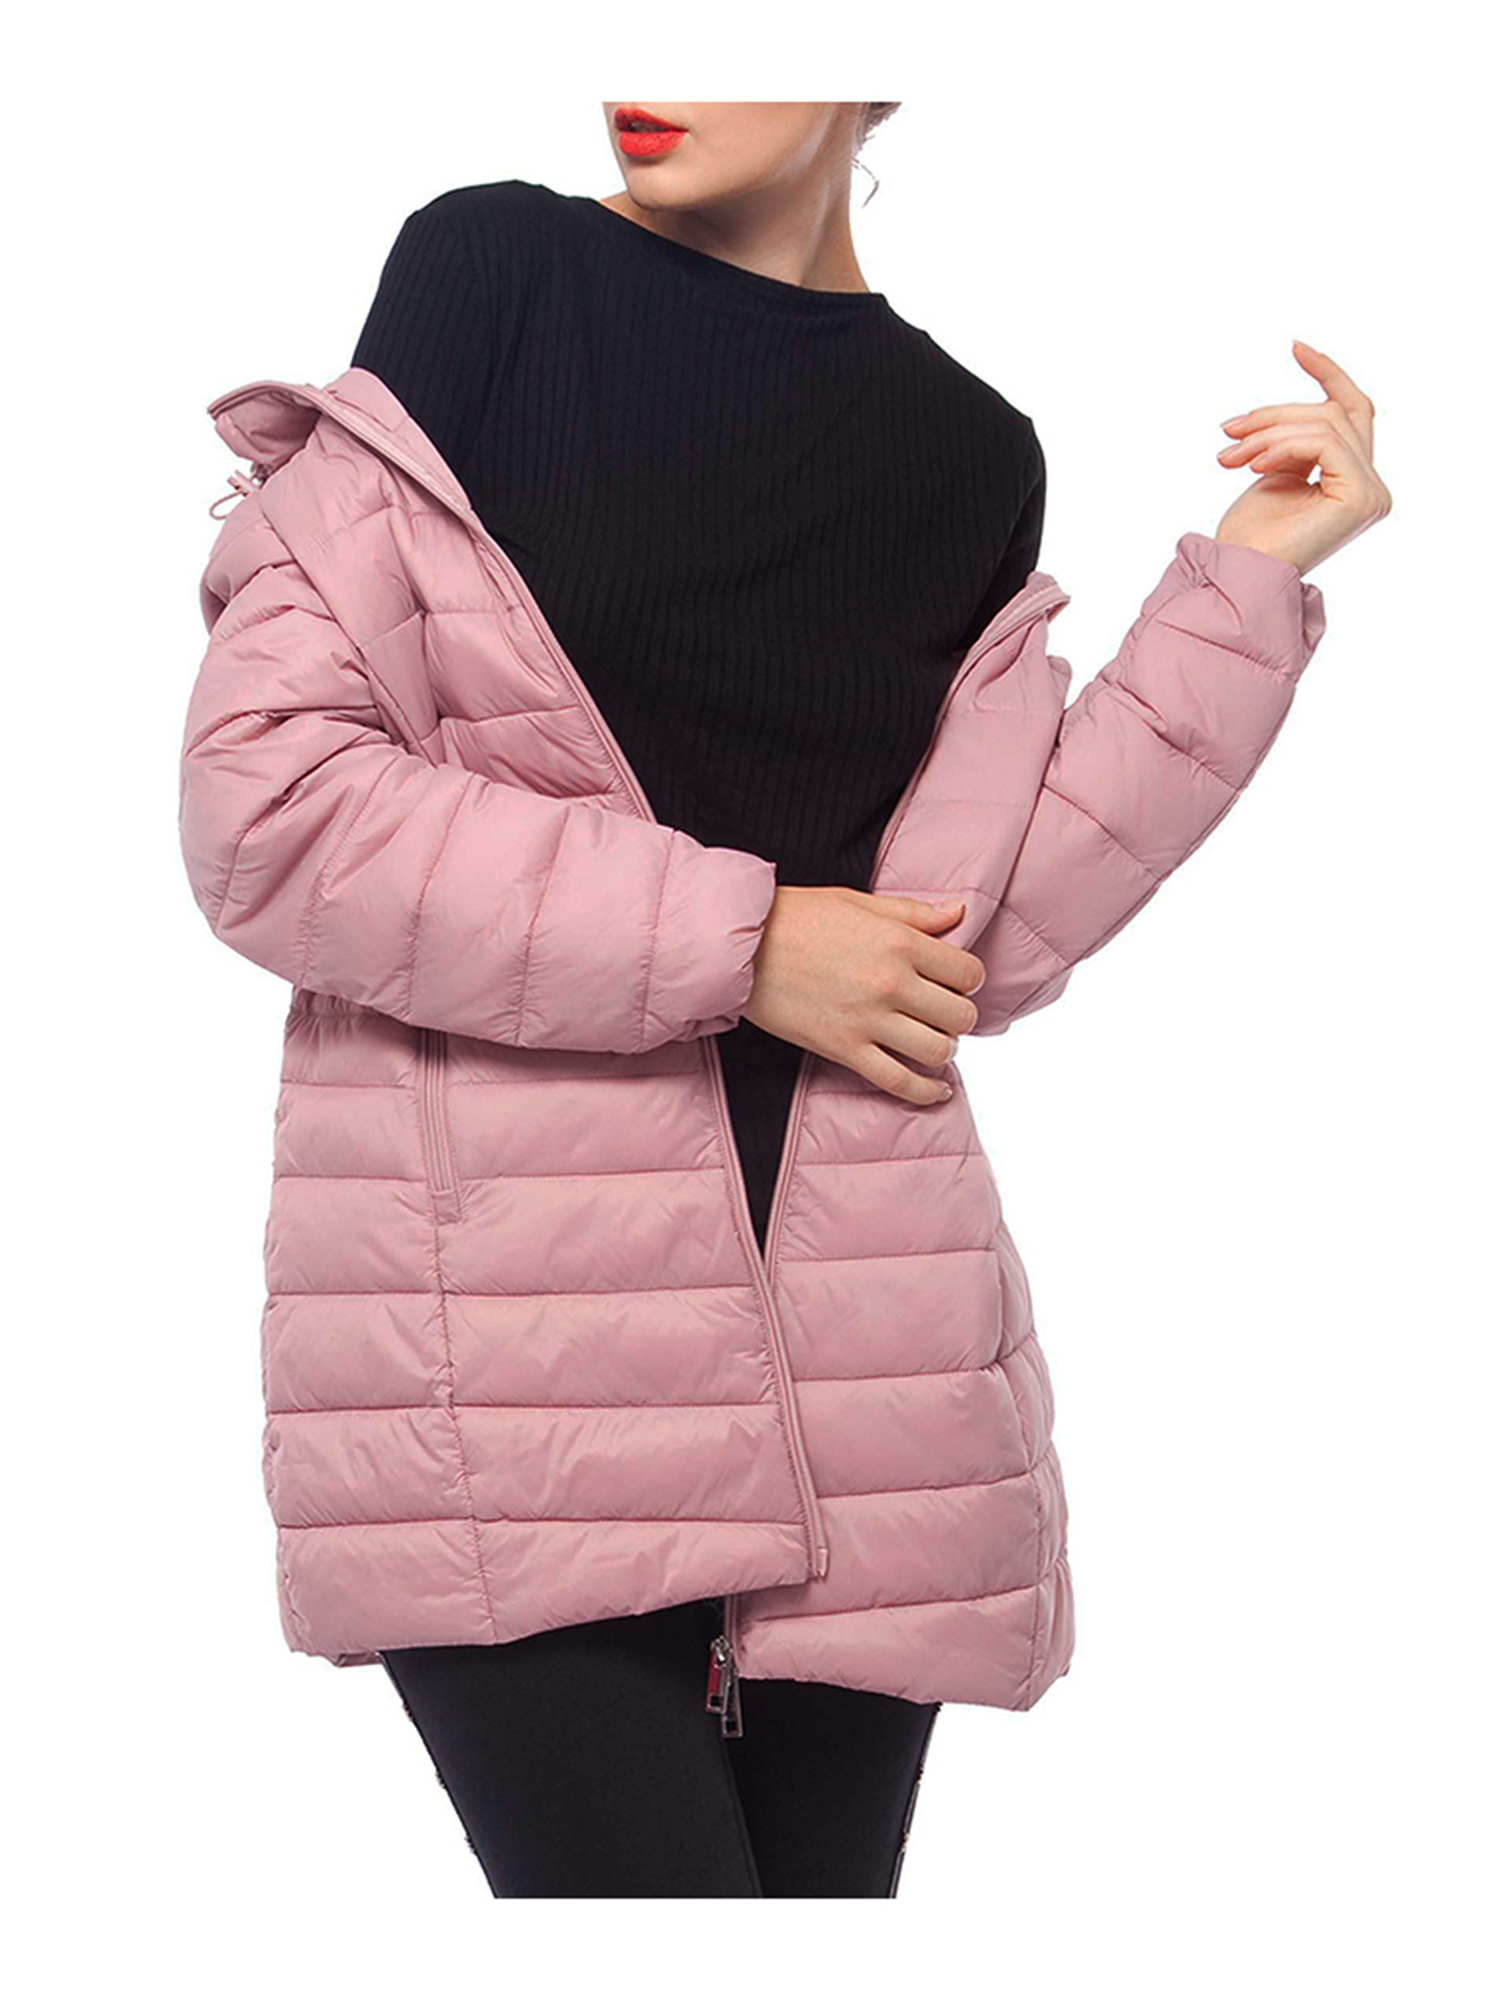 Rokka&Rolla Women's Light Long Coat Packable Puffer Jacket - image 3 of 8